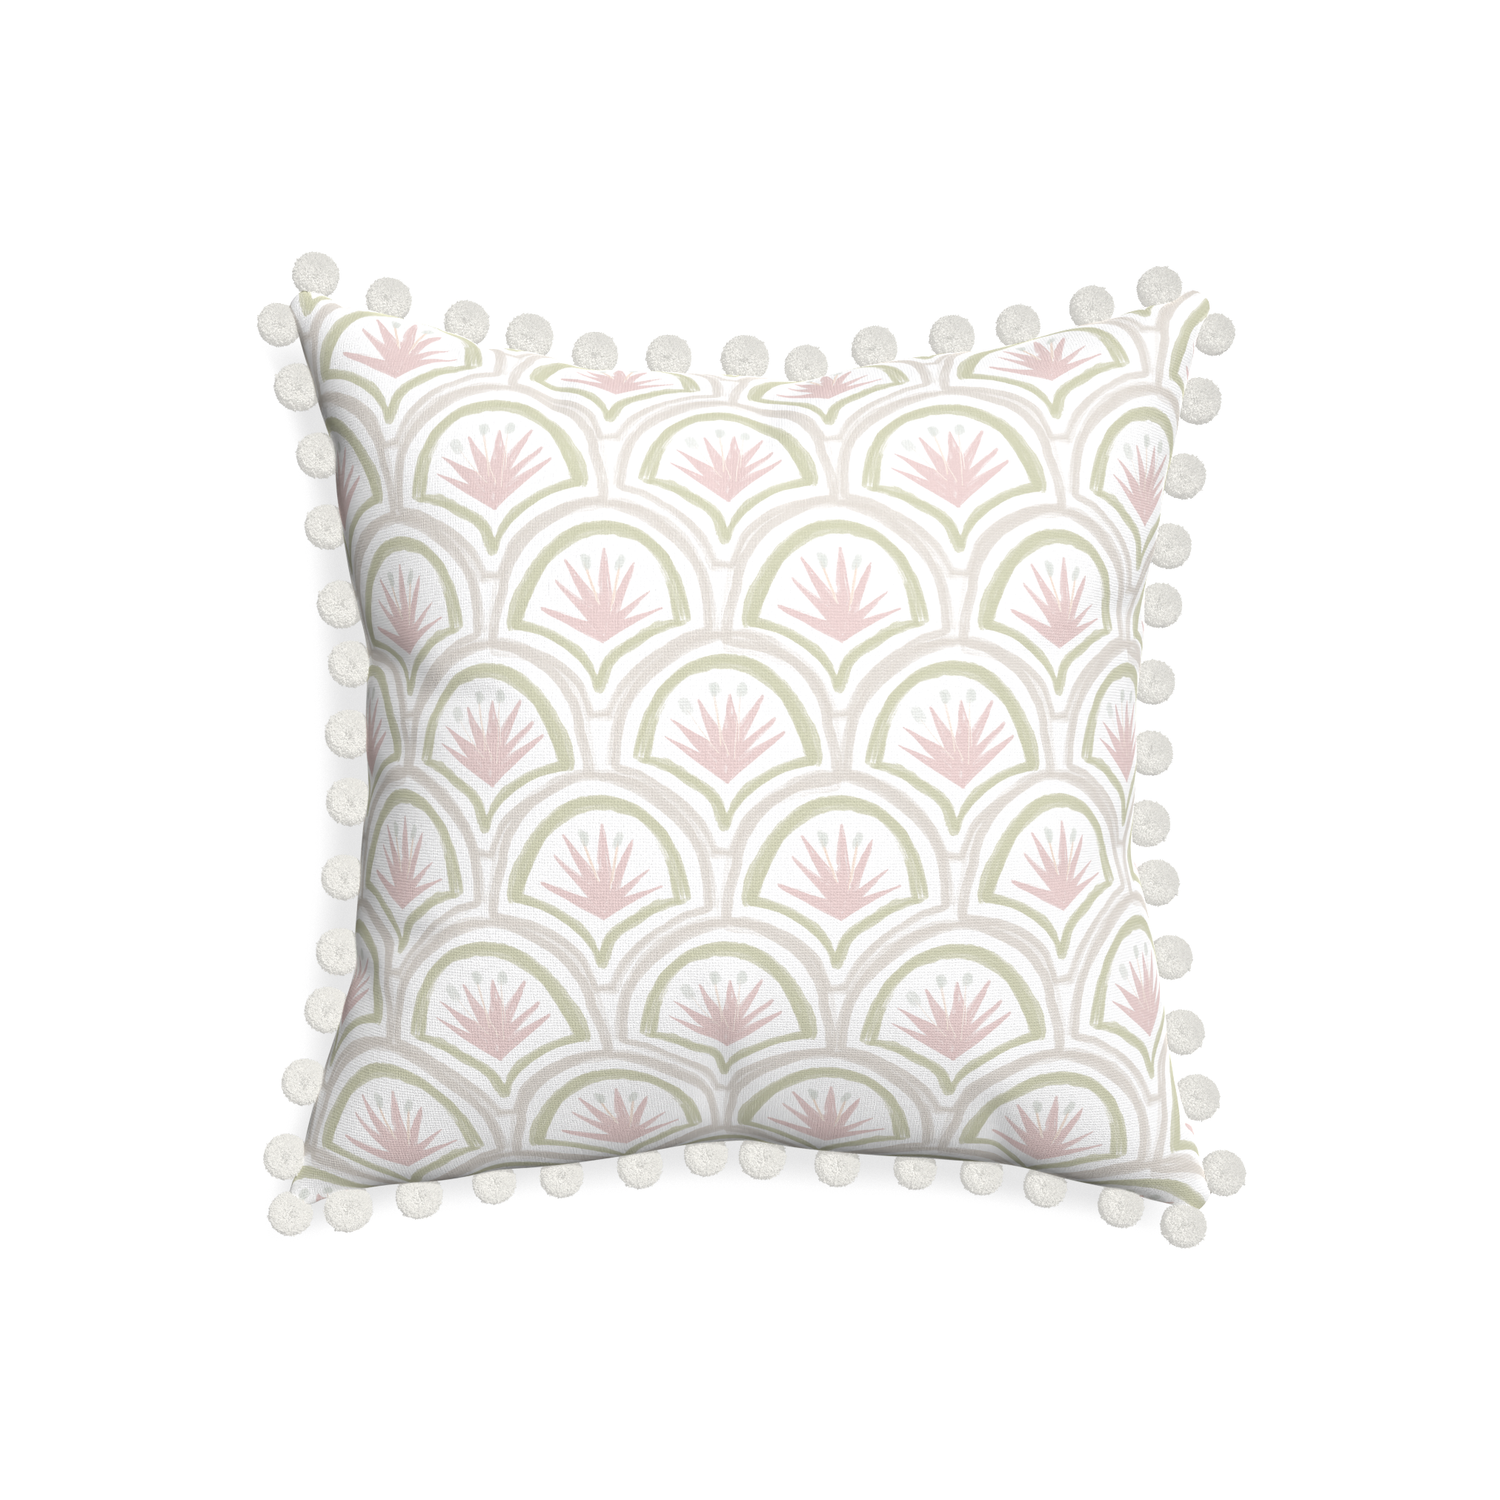 20-square thatcher rose custom pillow with snow pom pom on white background